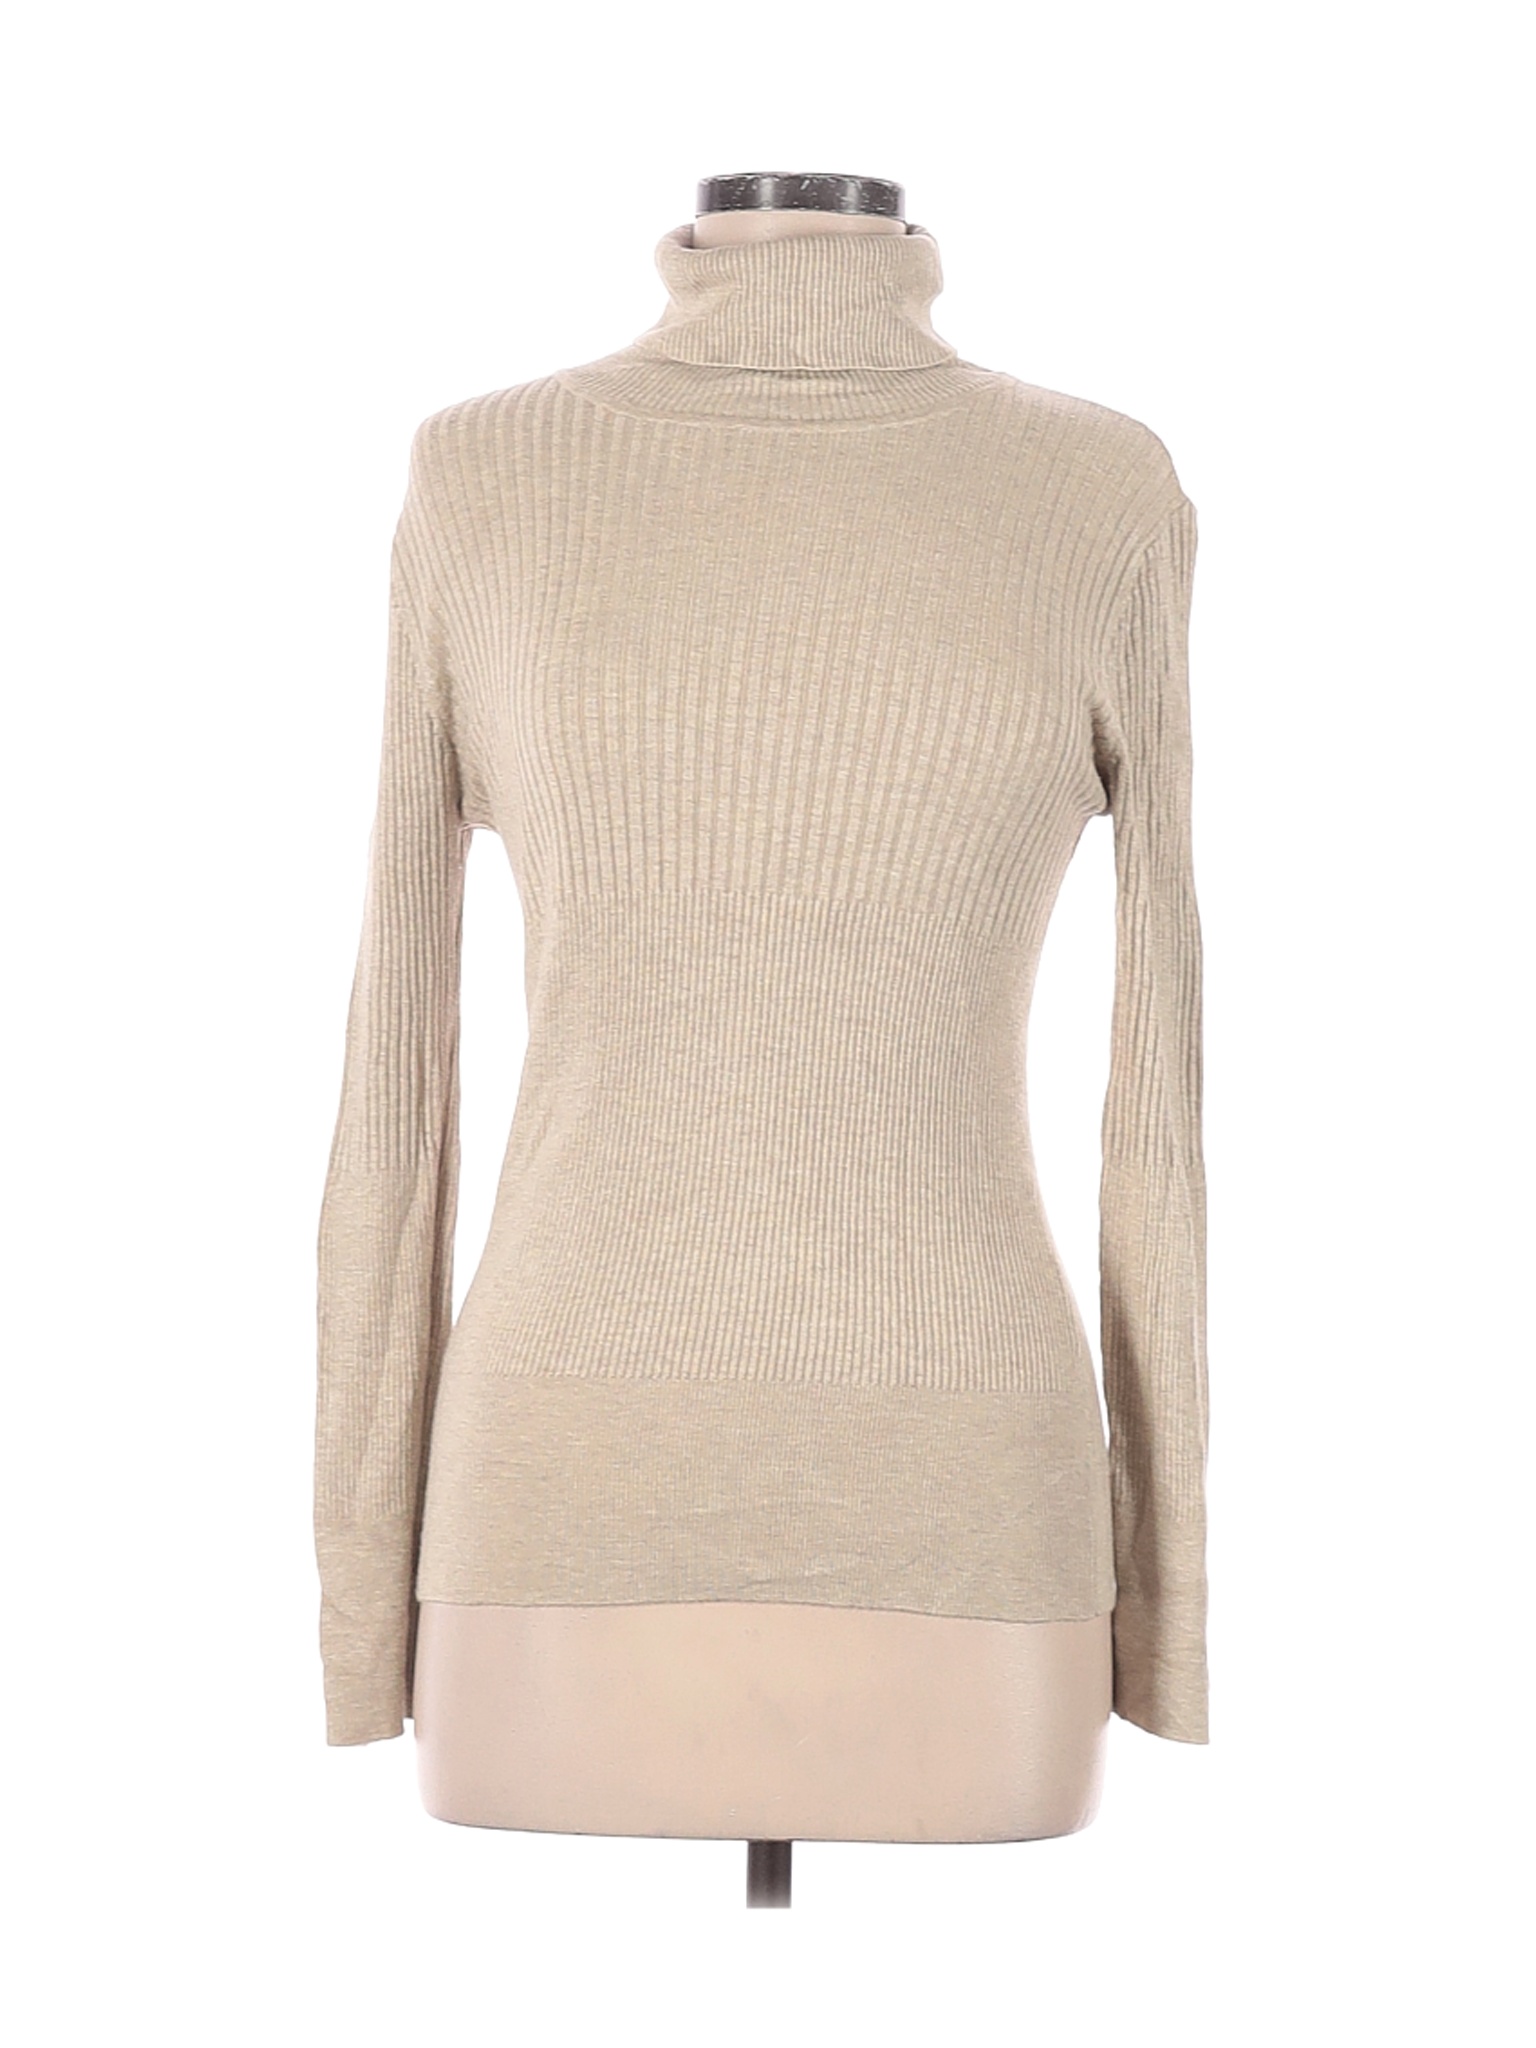 Max Studio Women Brown Turtleneck Sweater M | eBay